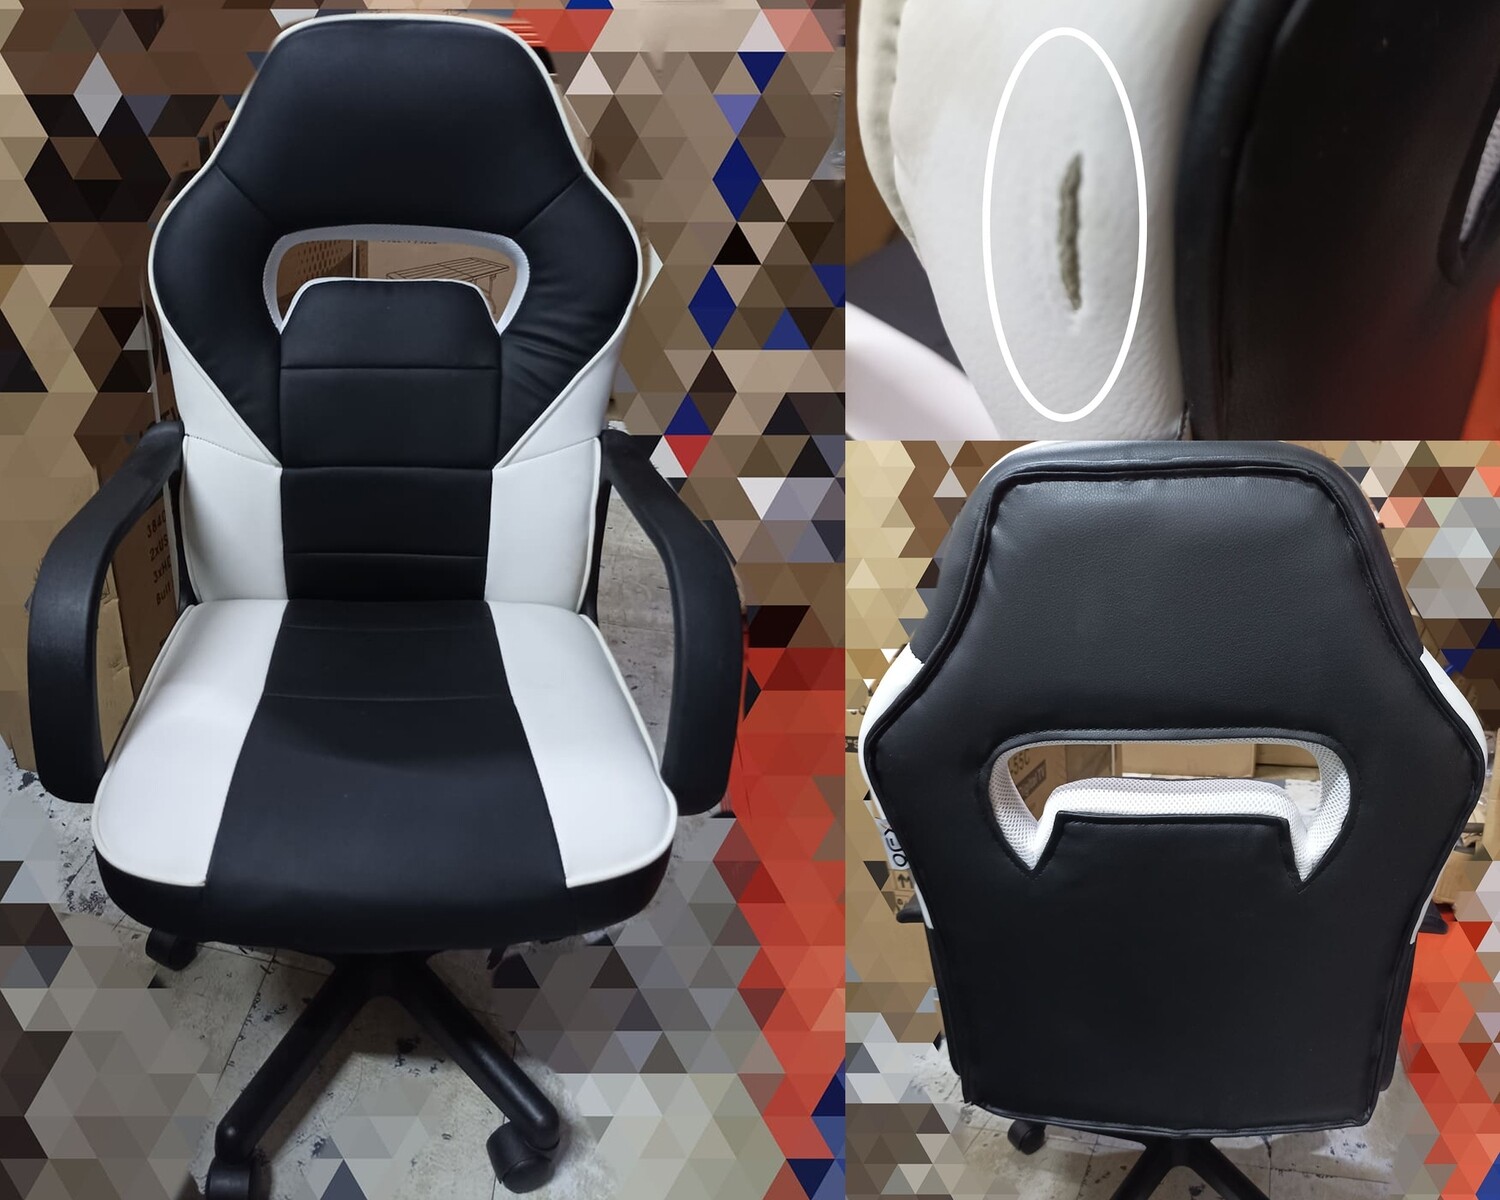 (Sale) OFX Koufax PU Gaming Chair (Black+White) (Backrest Torn)